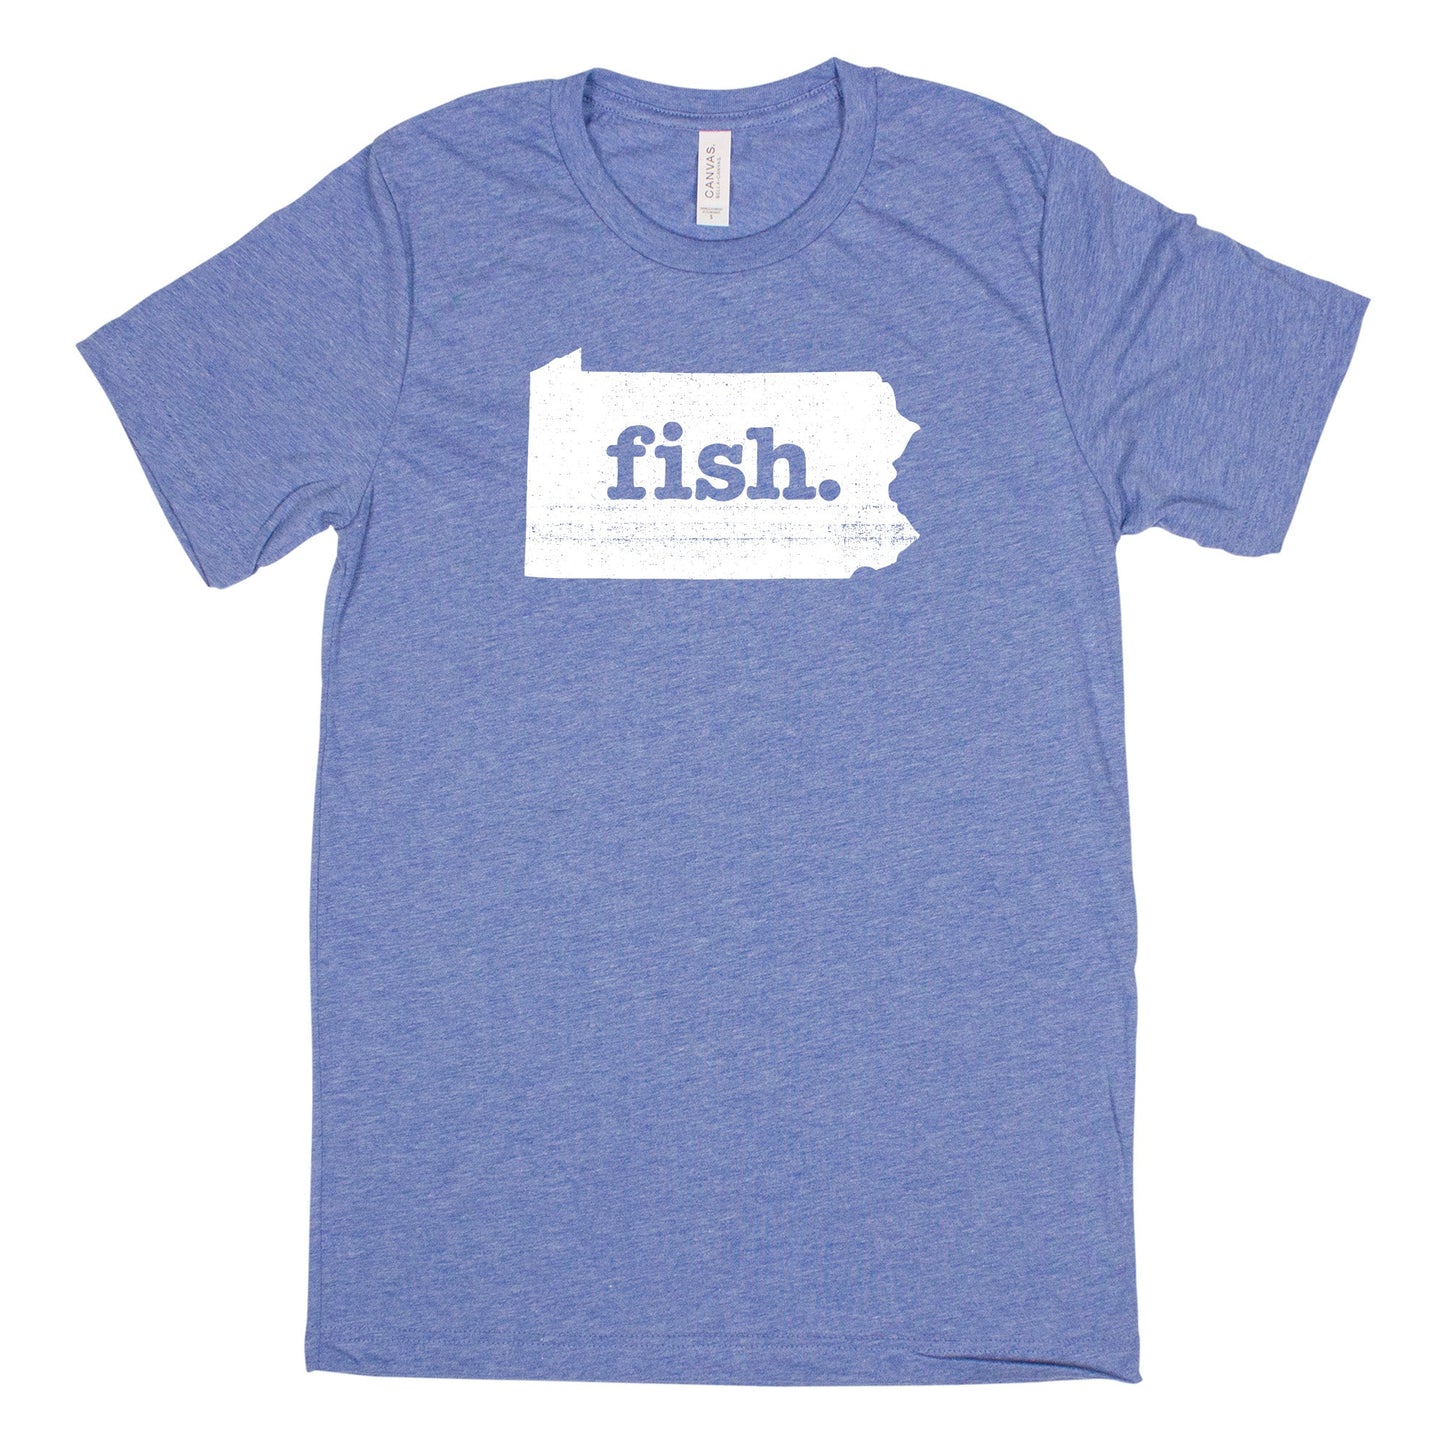 fish. Men's Unisex T-Shirt - Pennsylvania